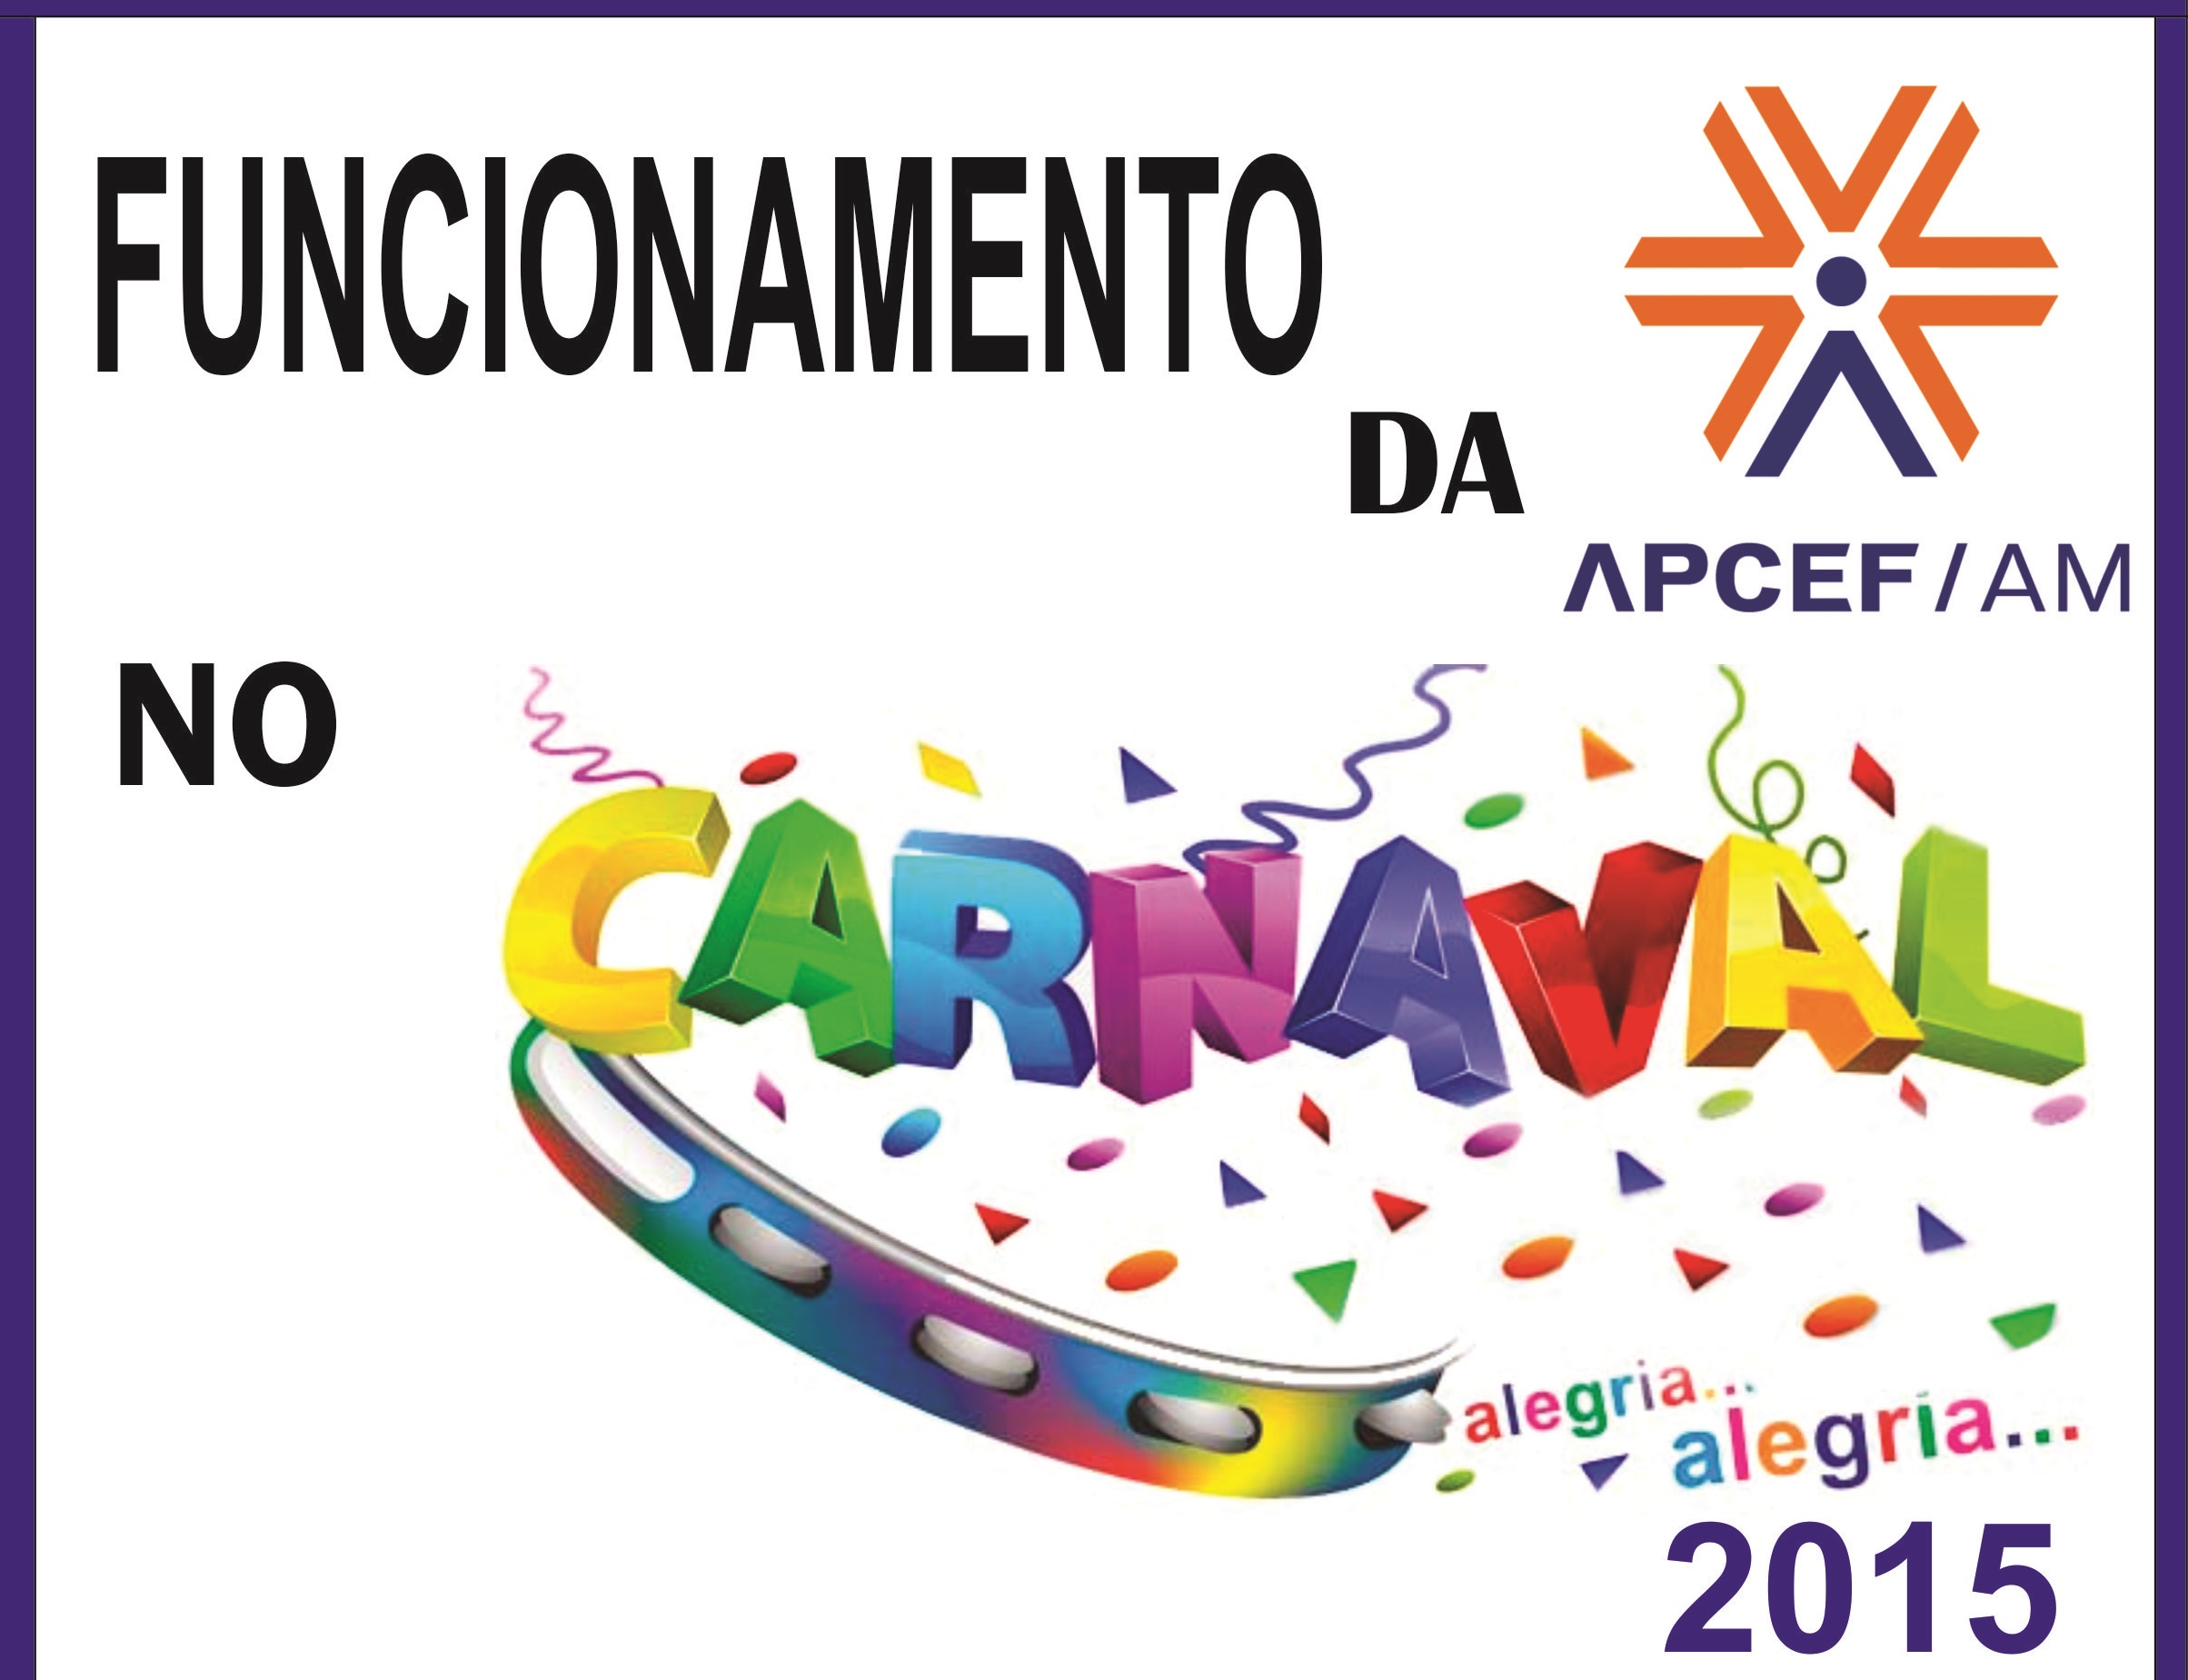 Funcionamento da APCEF no Carnaval.